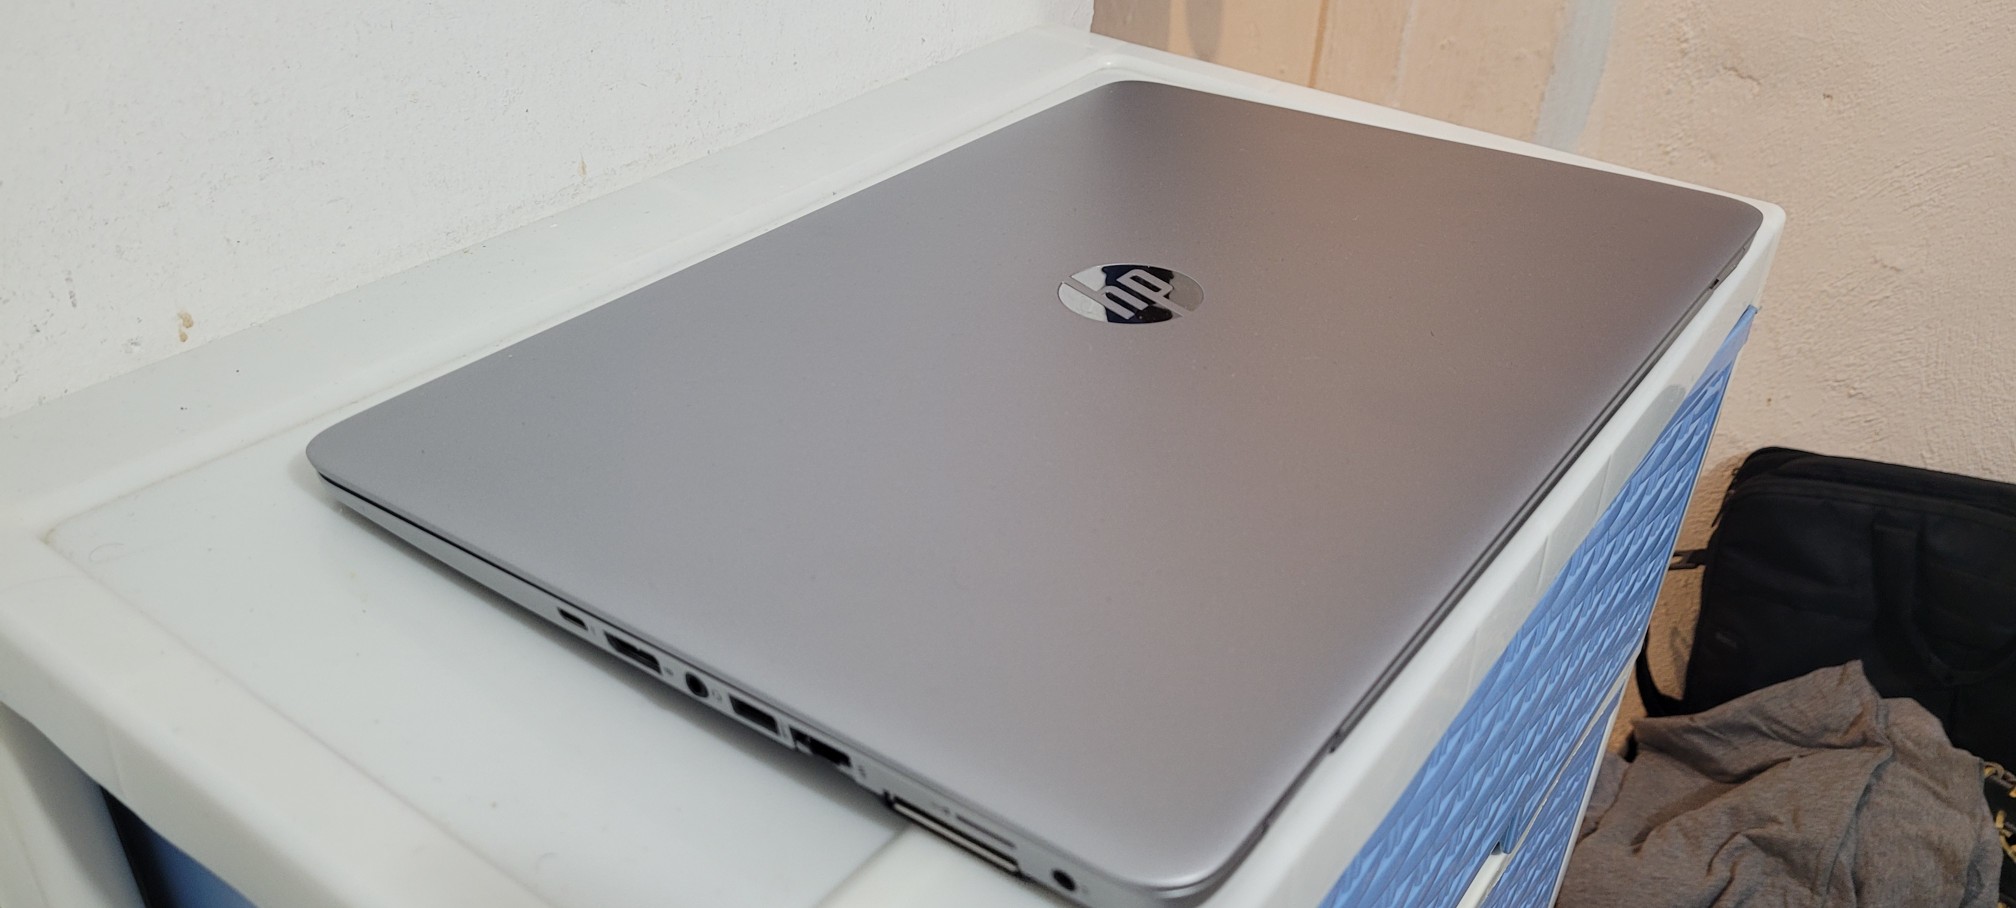 computadoras y laptops - laptop hp Slim G3 14 Pulg Core i5 6ta Gen Ram 8gb ddr4 Disco 128gb SSD New 2